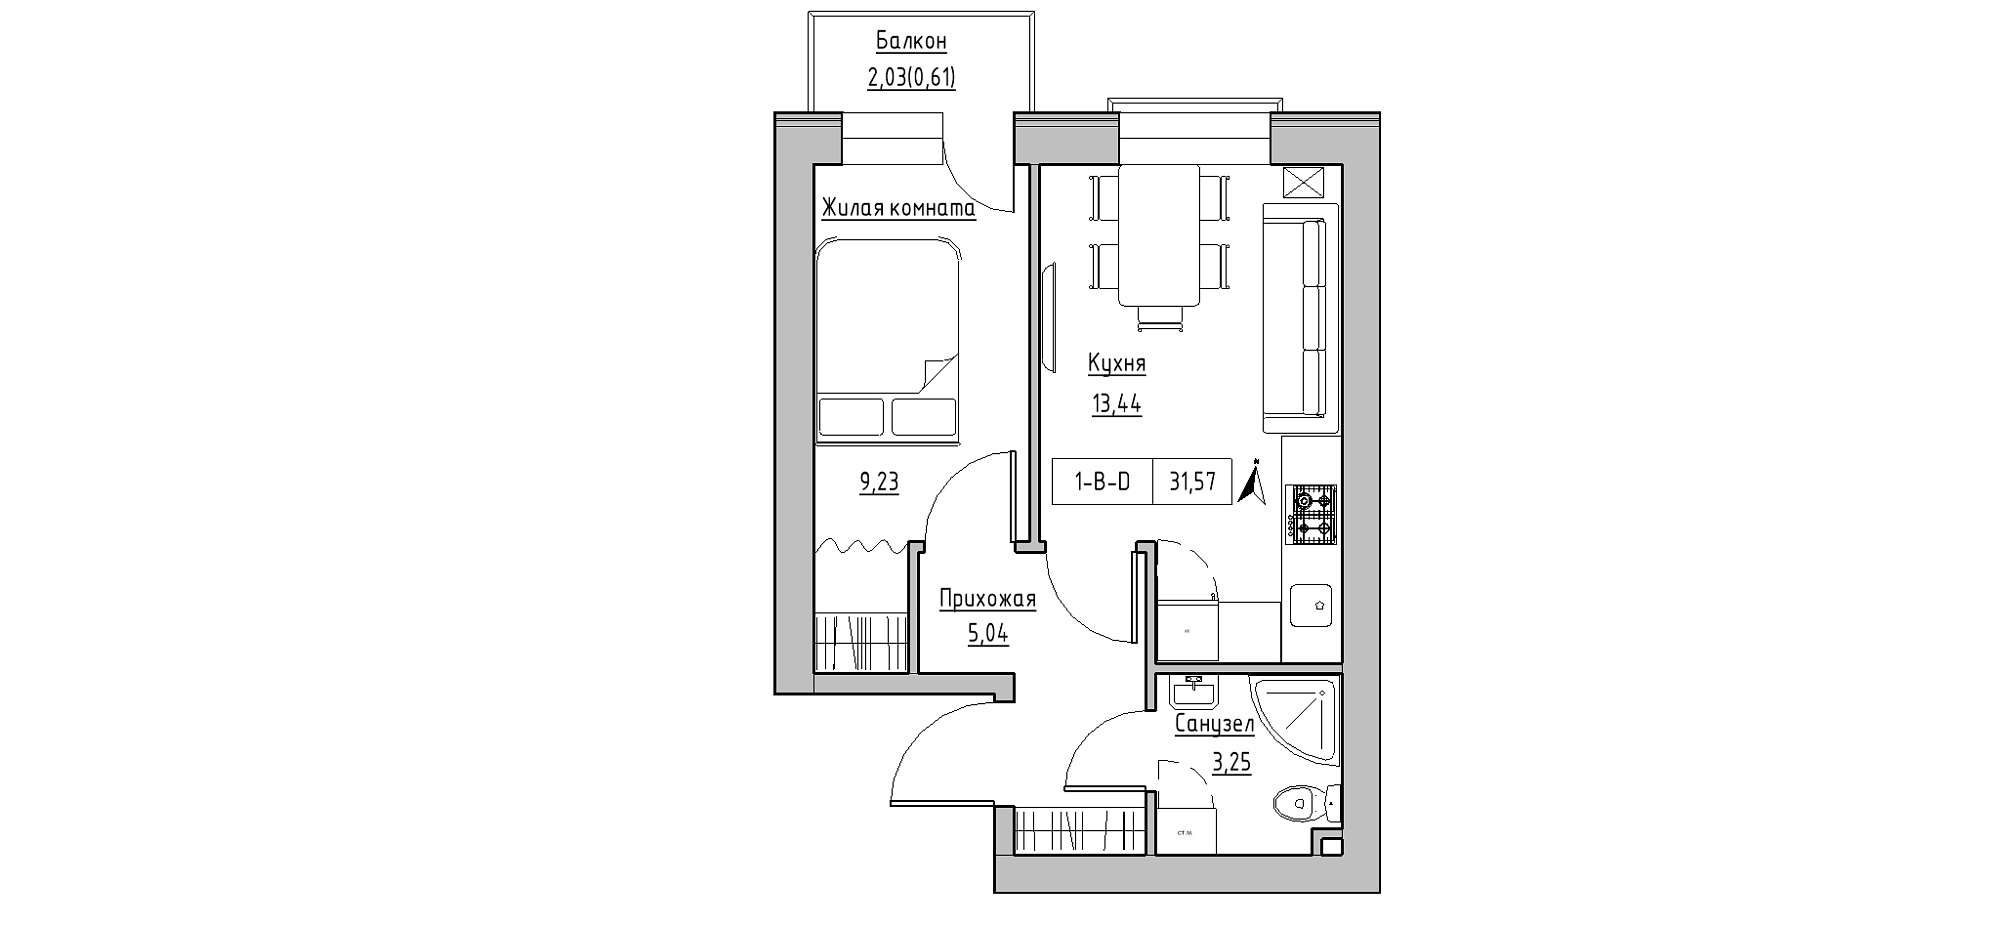 Planning 1-rm flats area 31.57m2, KS-020-05/0003.